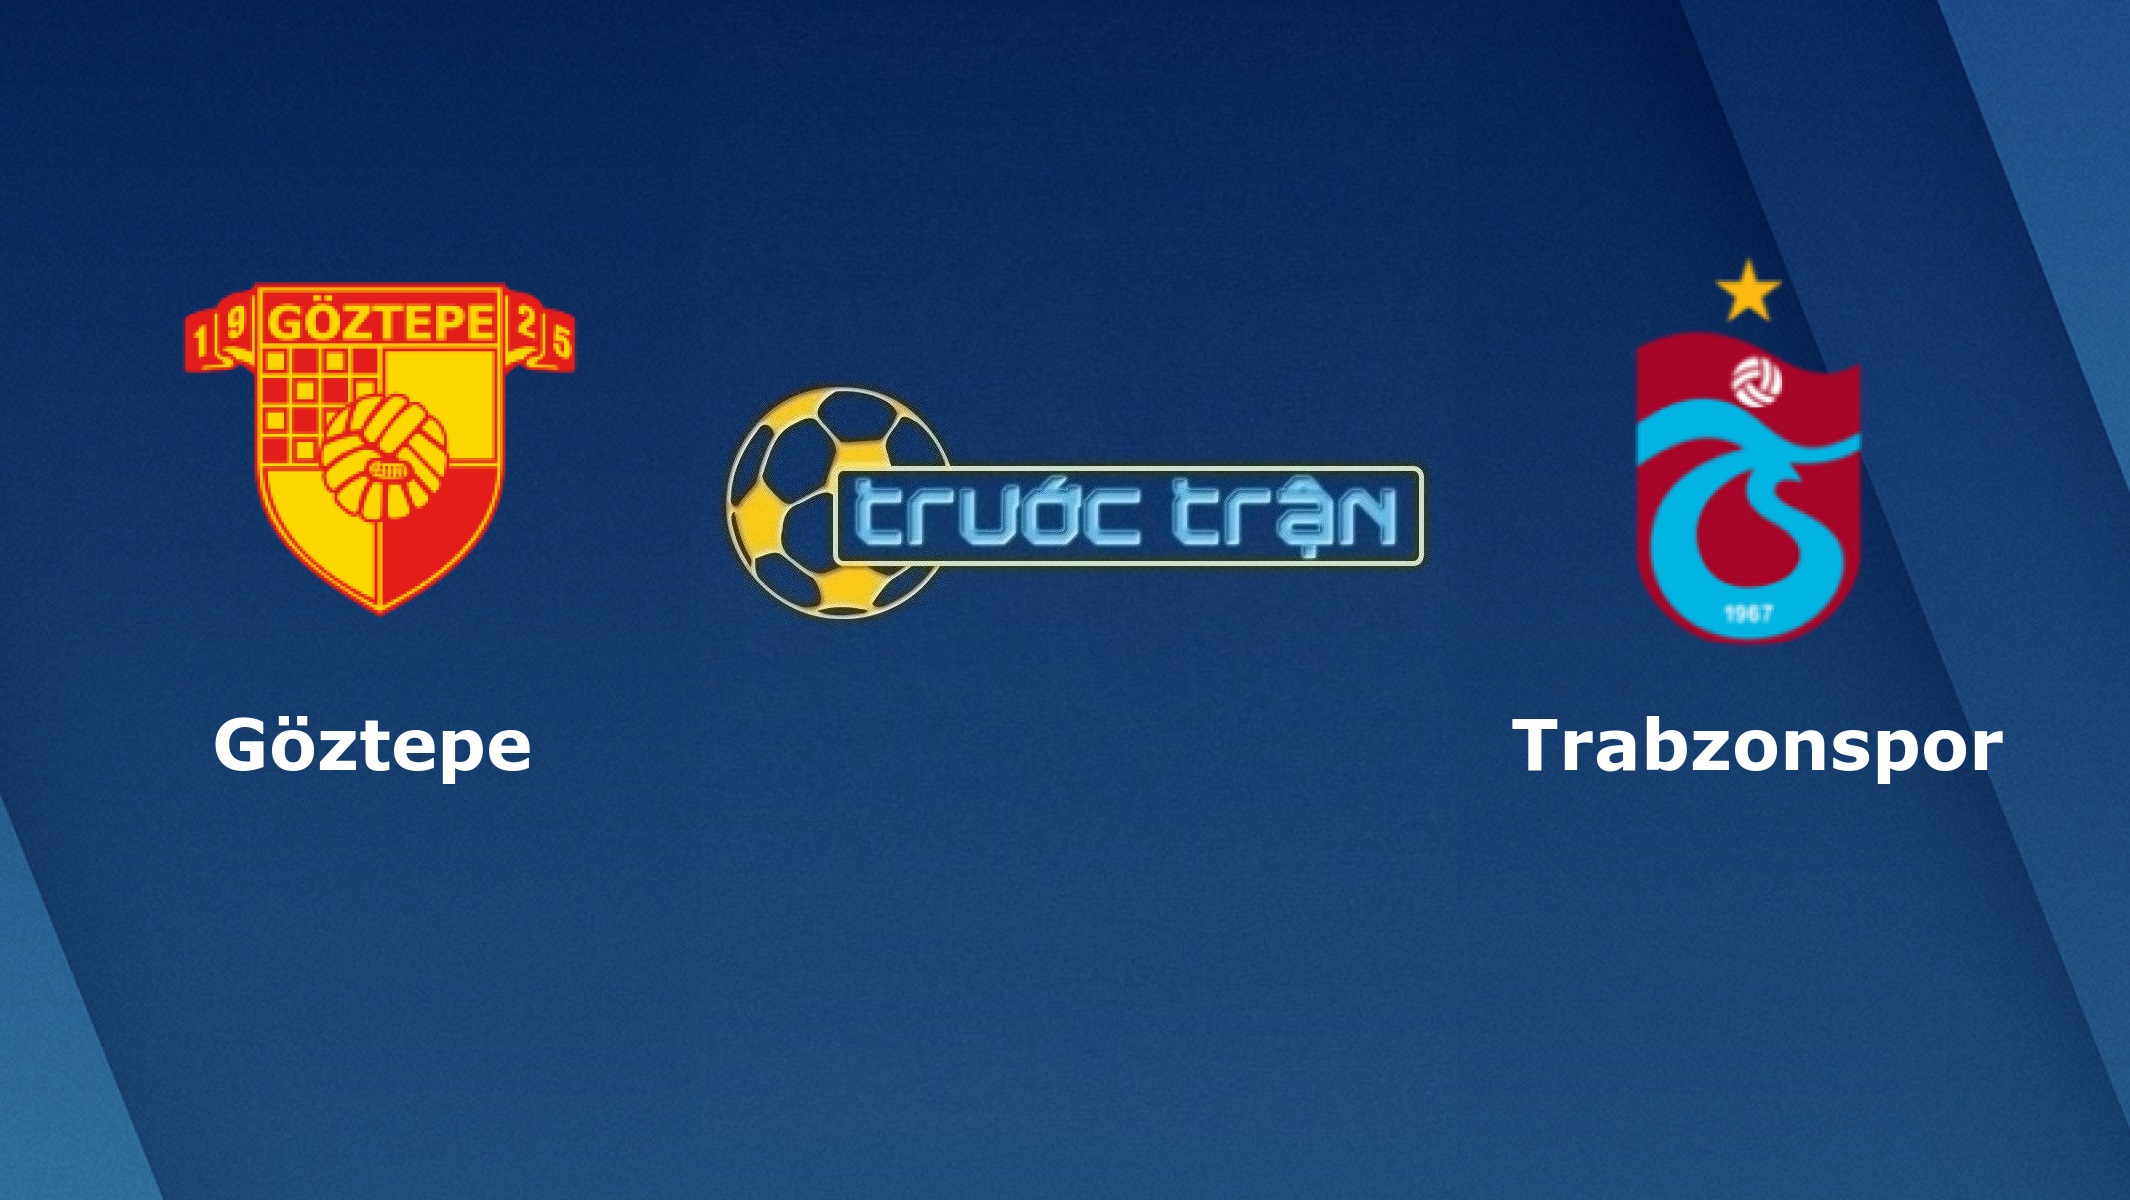 Goztepe vs Trabzonspor – Tip kèo bóng đá hôm nay – 20h00 28/04/2021